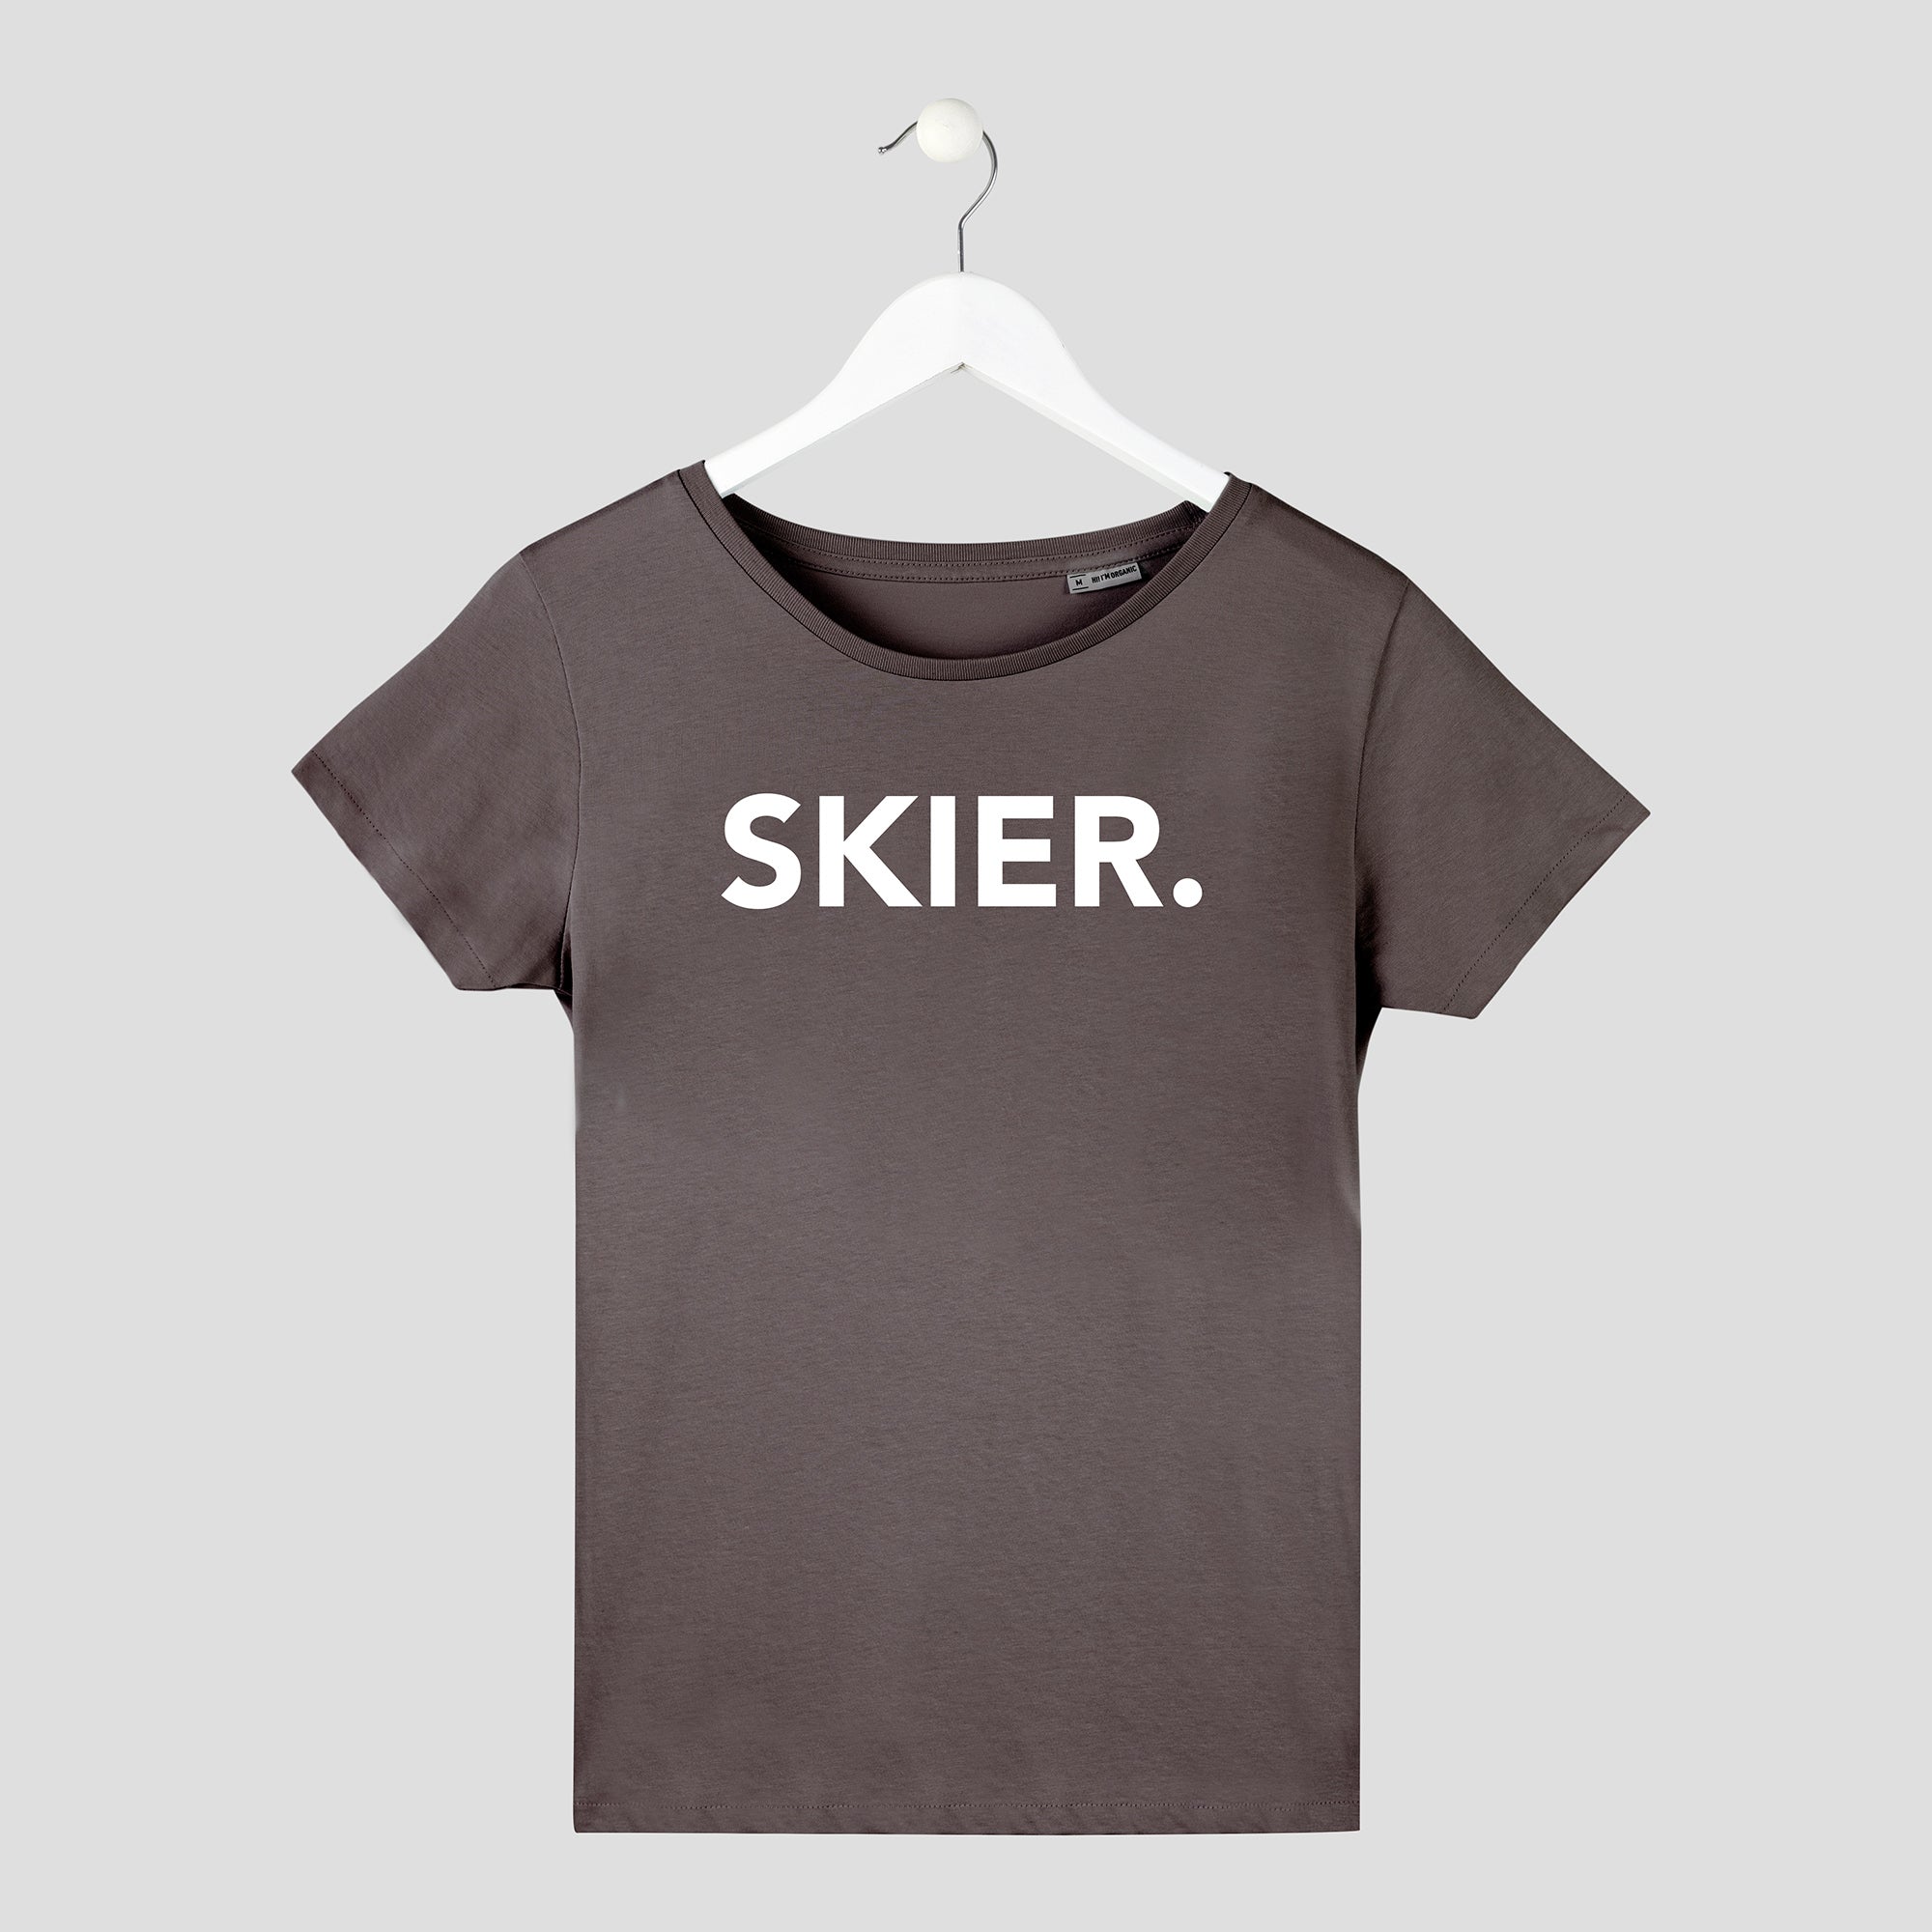 Camiseta de chica diseño ski color gris